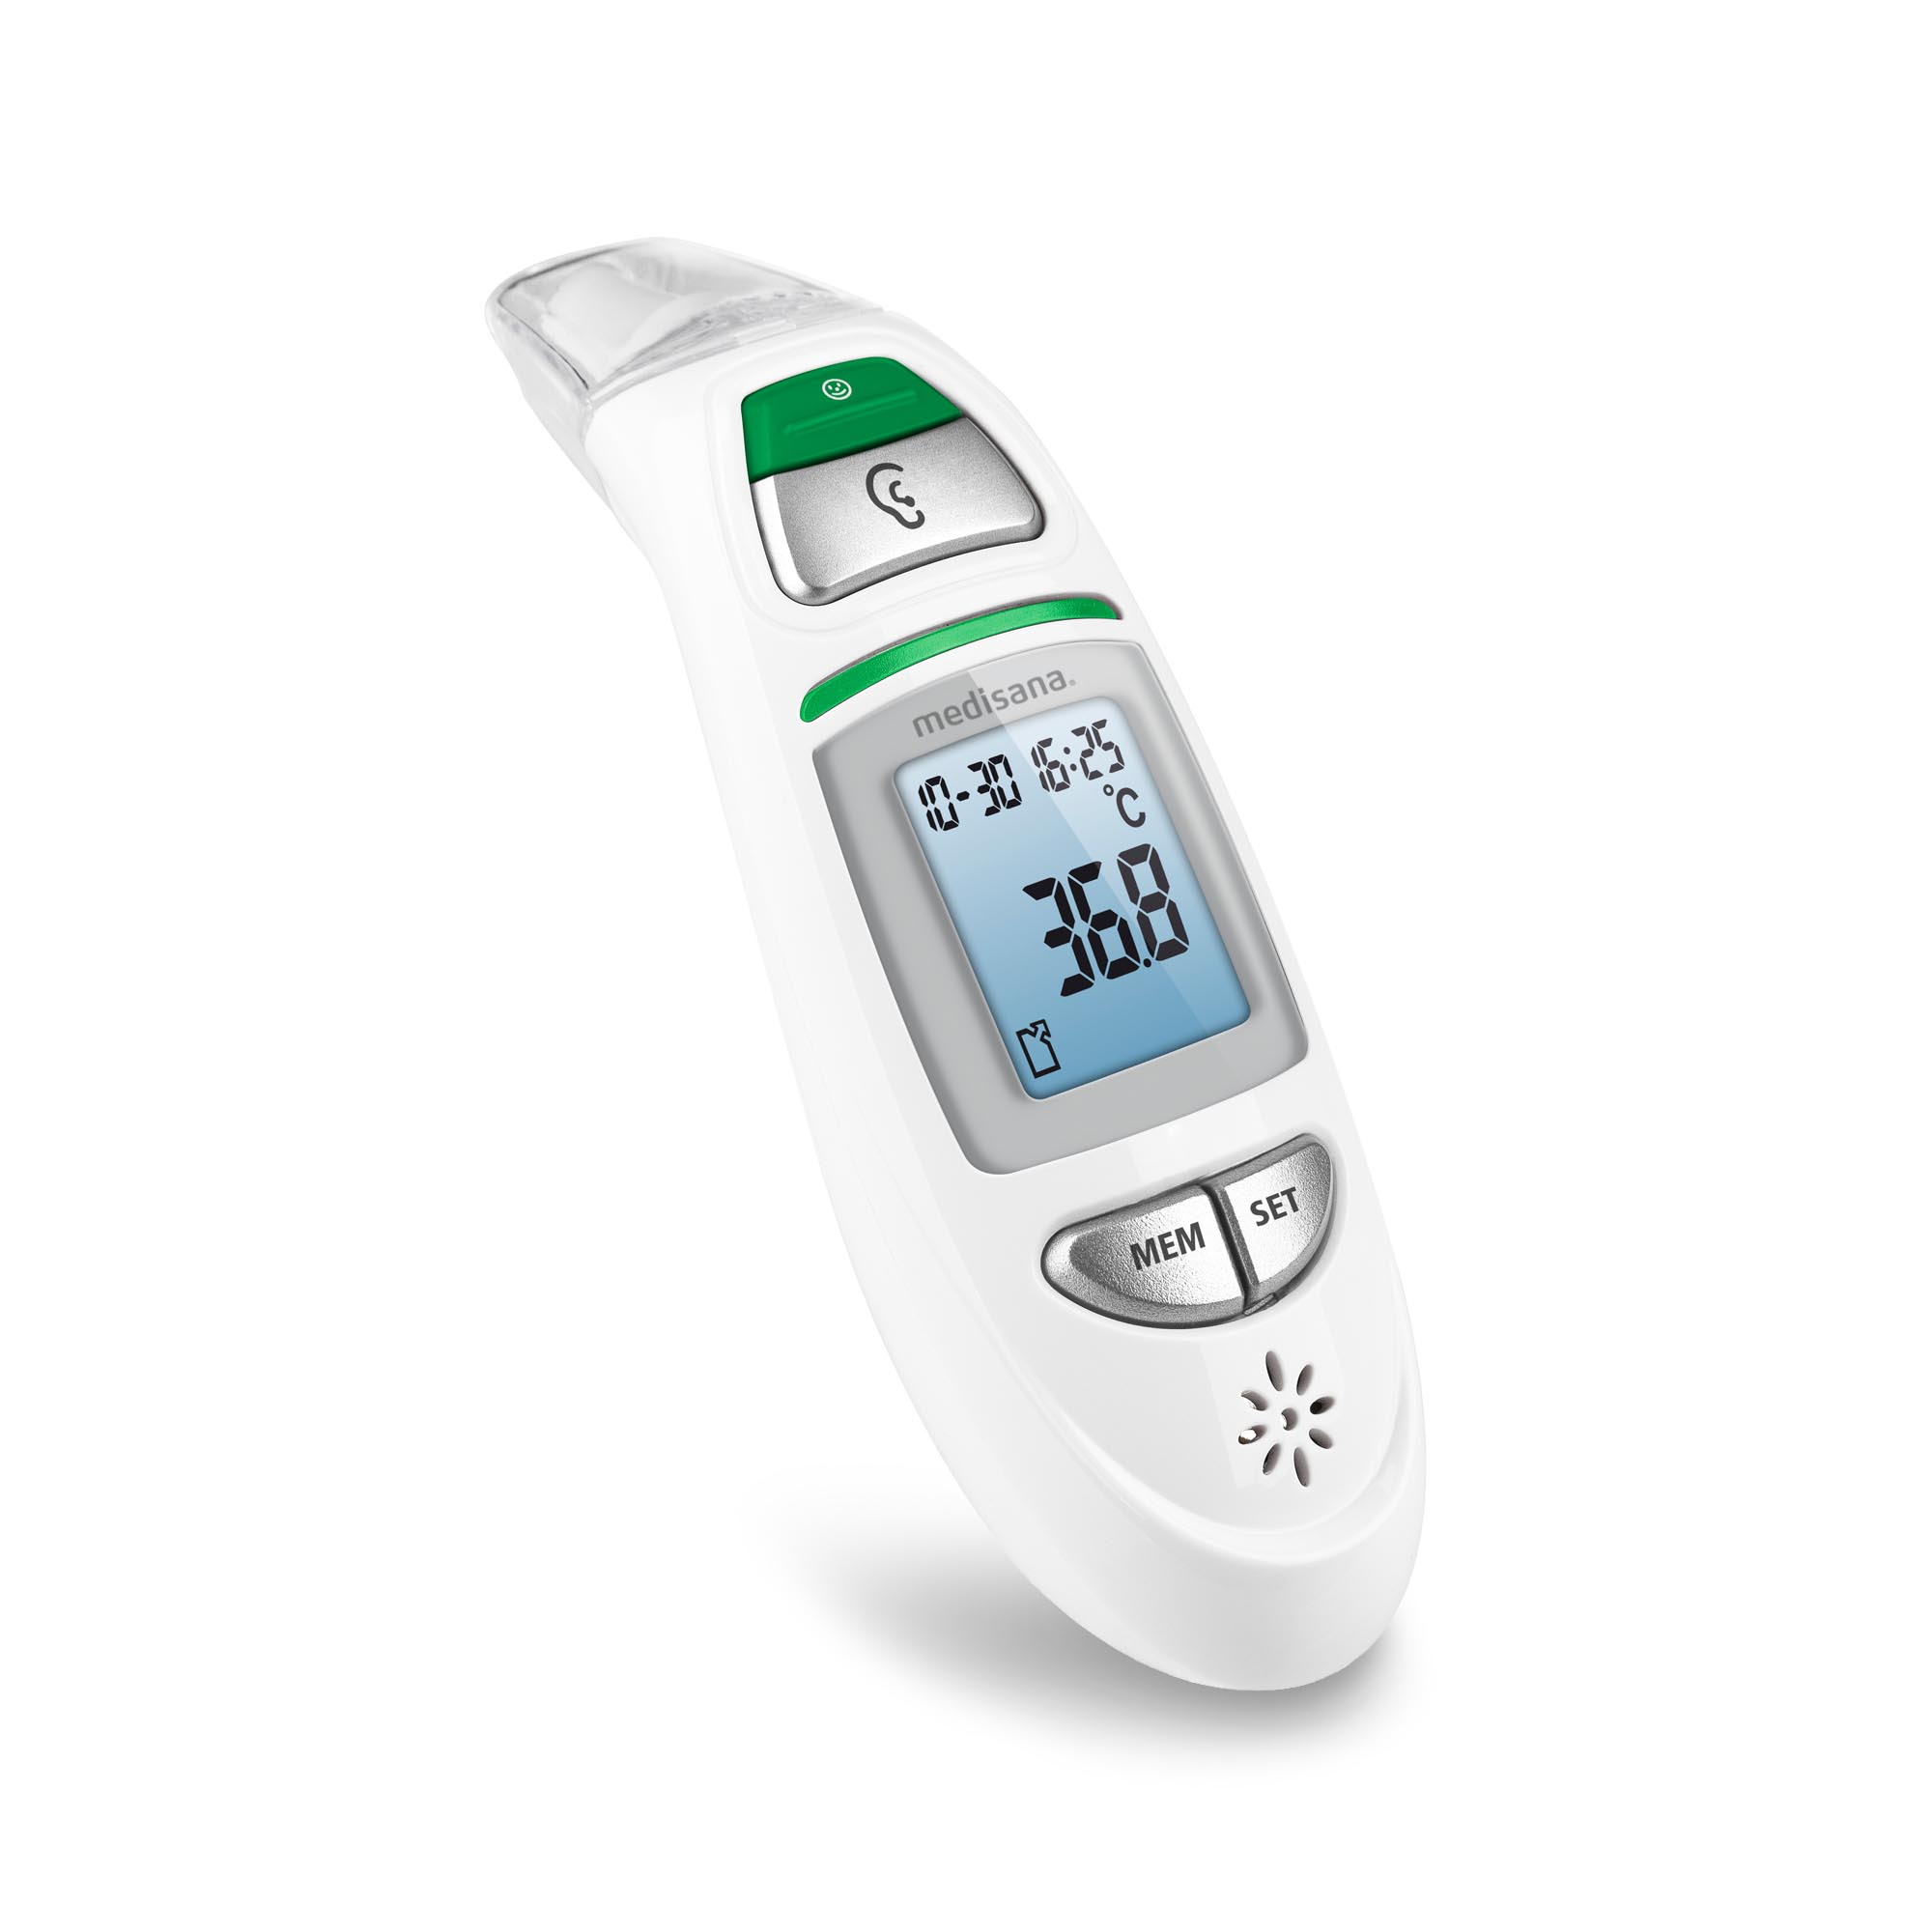 TM 750 Infrared multifunctional thermometer medisana®